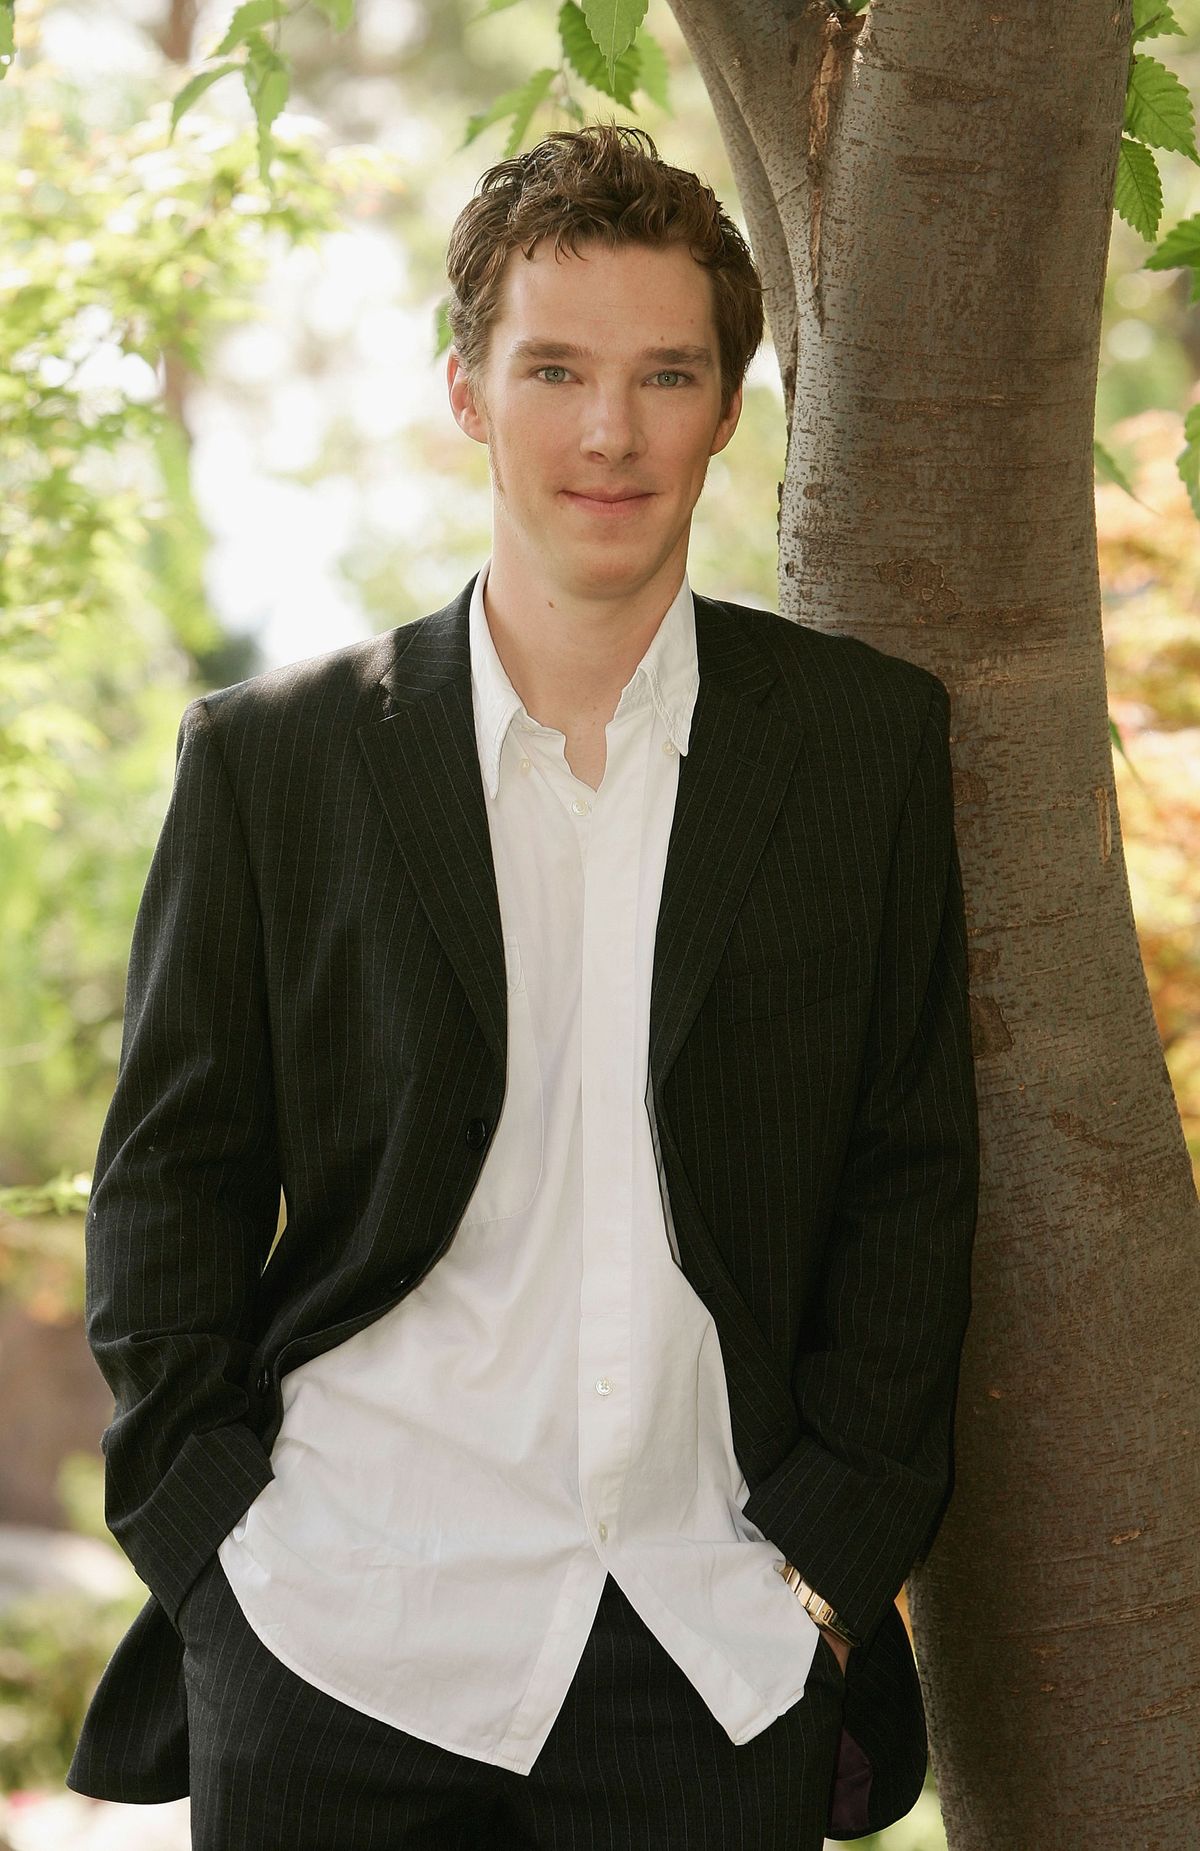 Benedict as a Baby = Super Cute, Duh